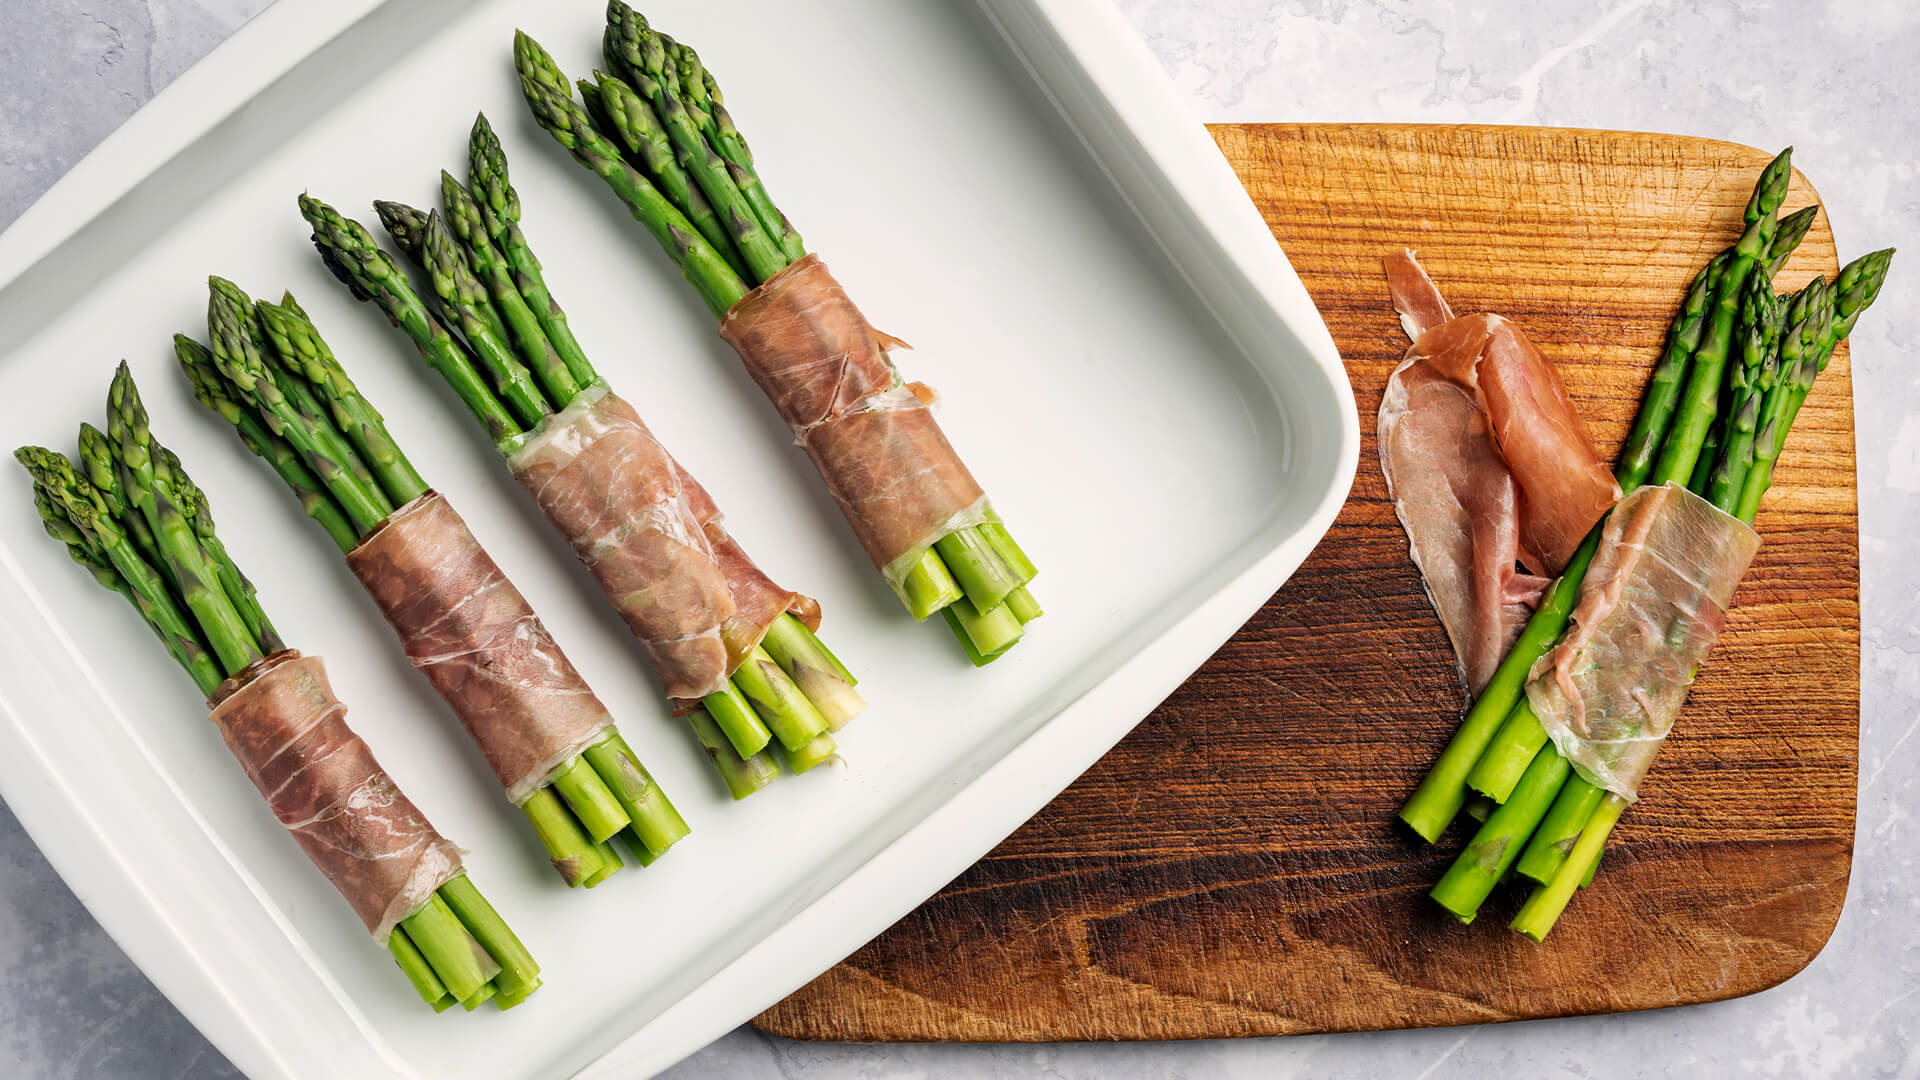 Bacon wrapped asparagus.